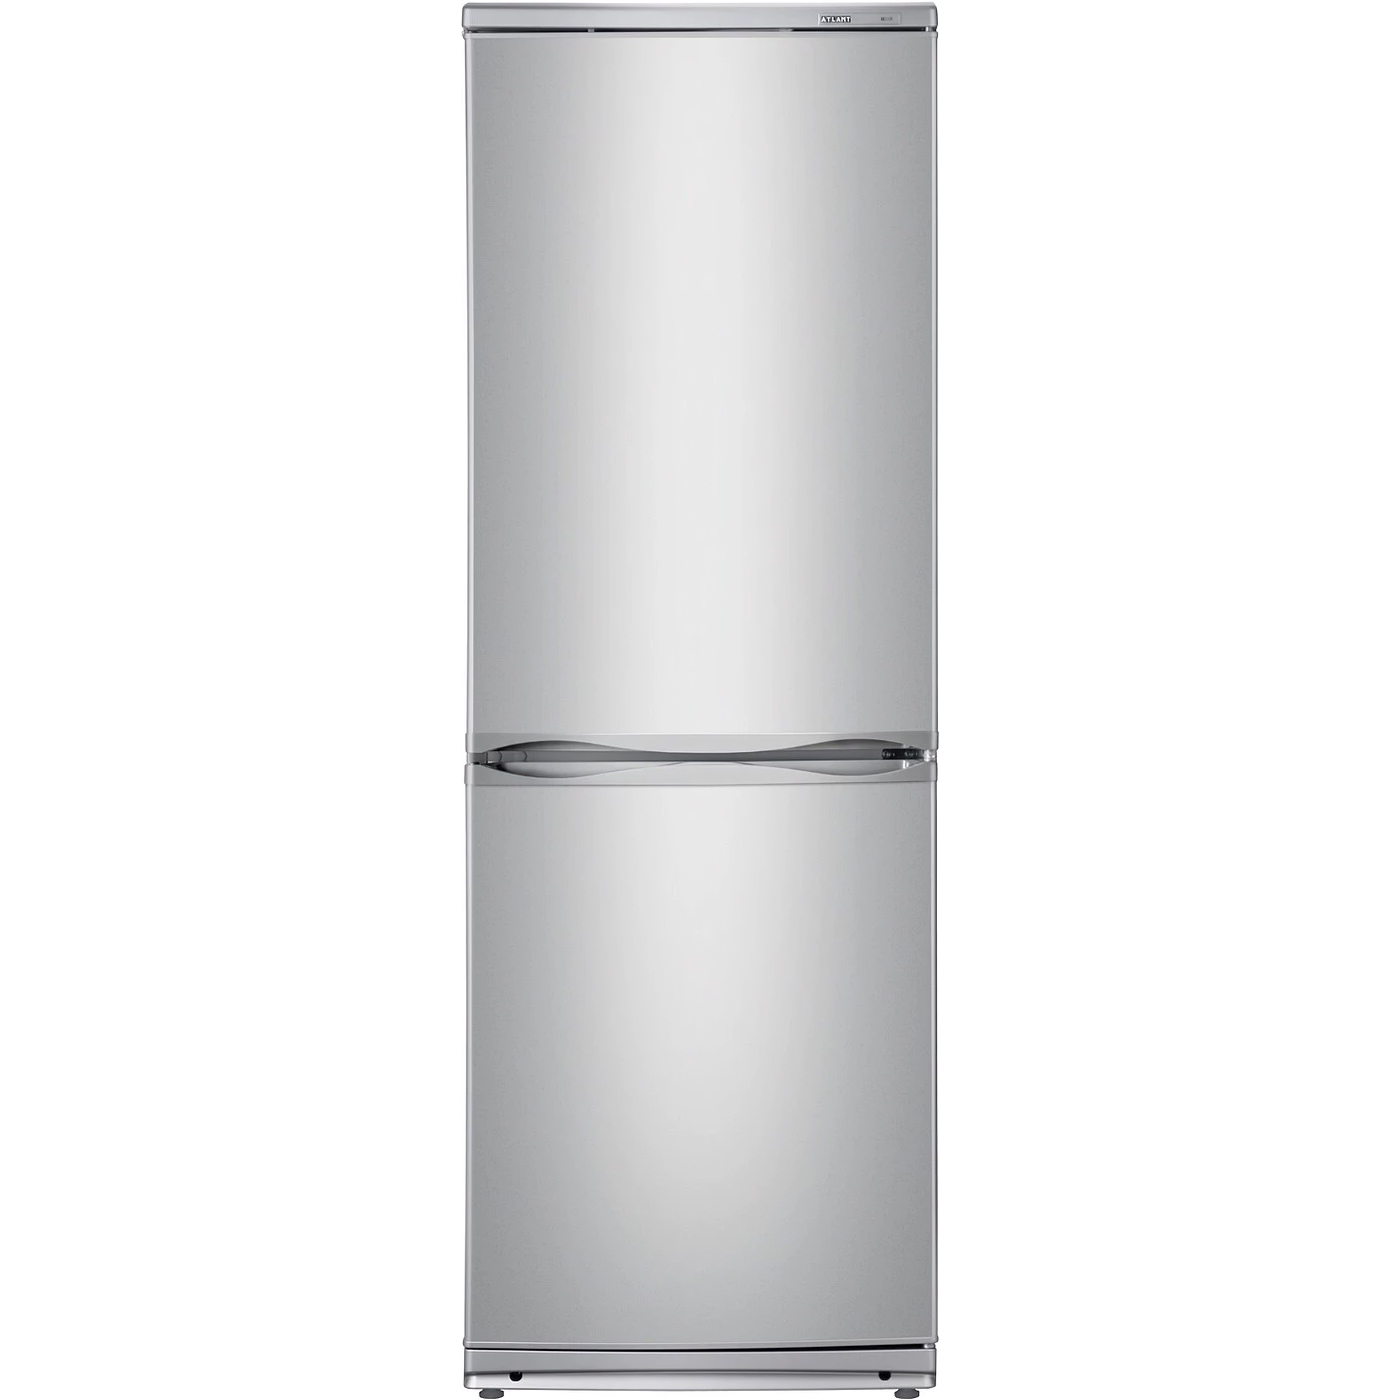 Холодильник ATLANT ХМ 4012-080 серебристый холодильник atlant хм 4425 049 nd серебристый